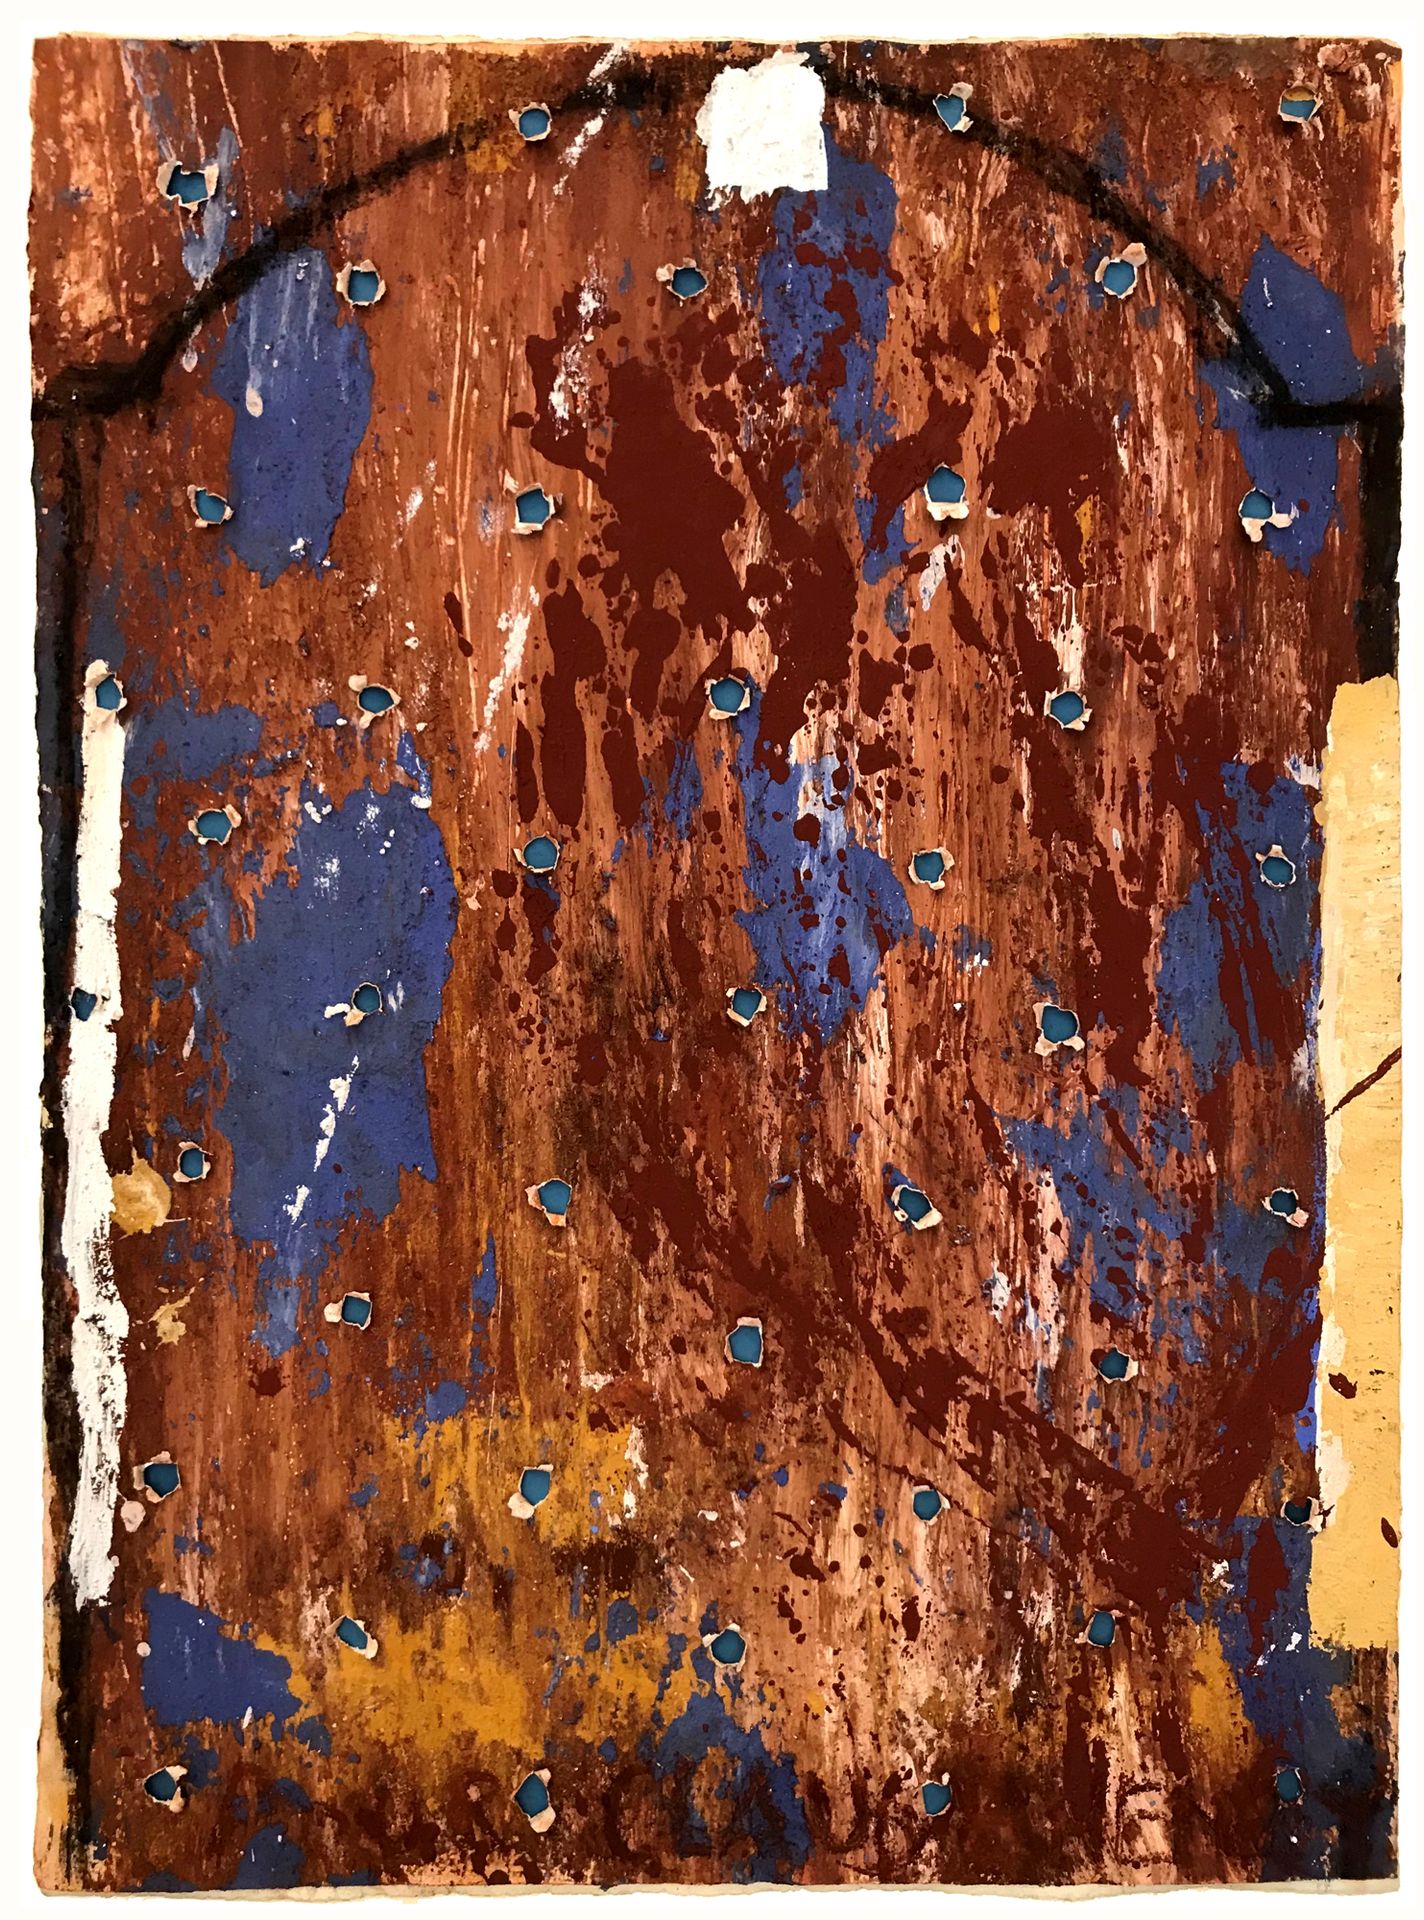 VIVIEN ISNARD (NE EN 1946) 无题（门），1993
两层纸上的混合媒体
背面有签名和日期
76 x 55 cm